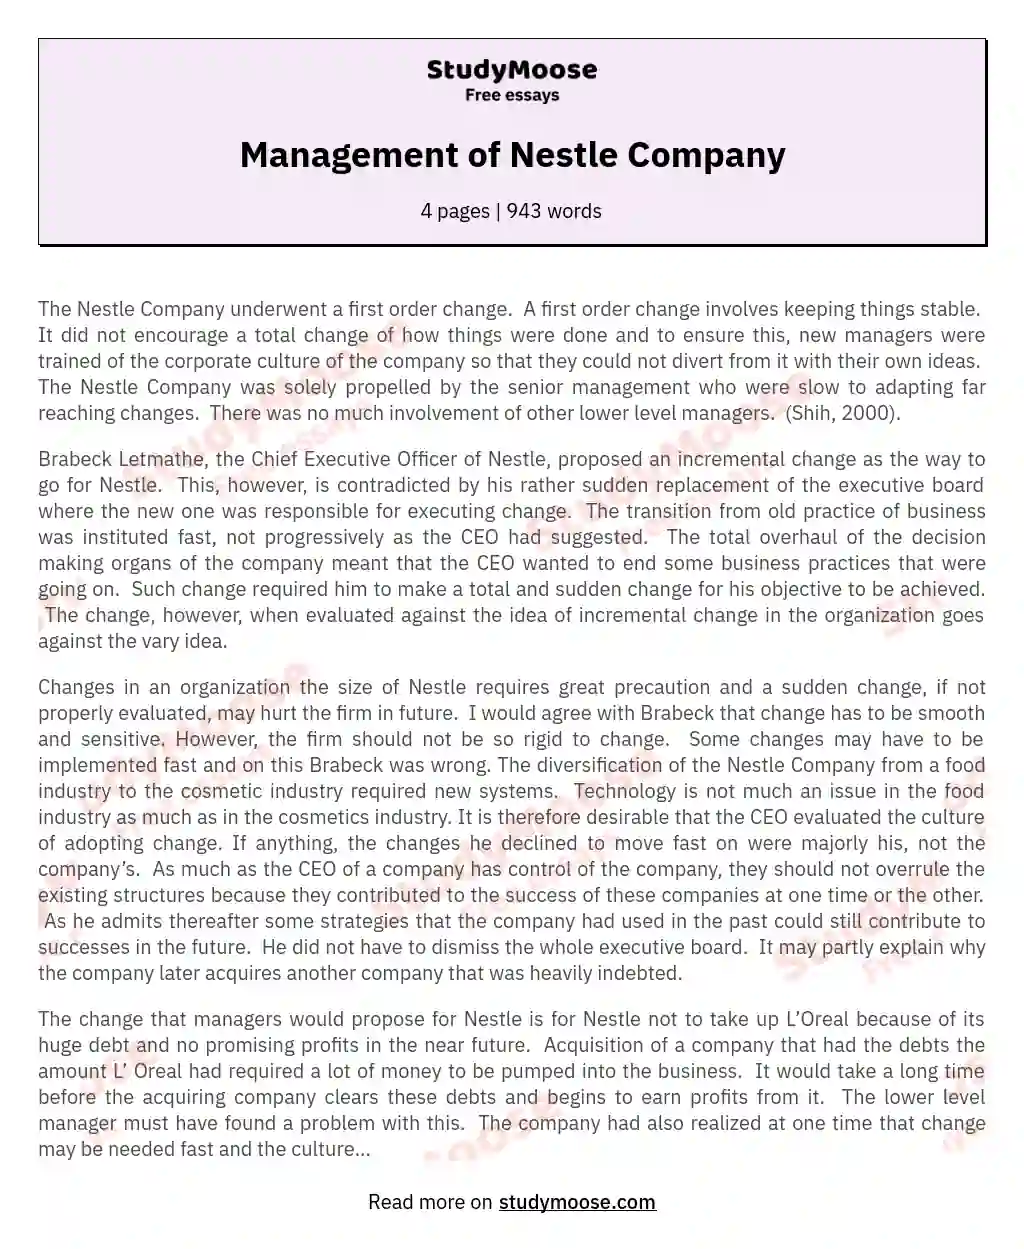 Management of Nestle Company essay